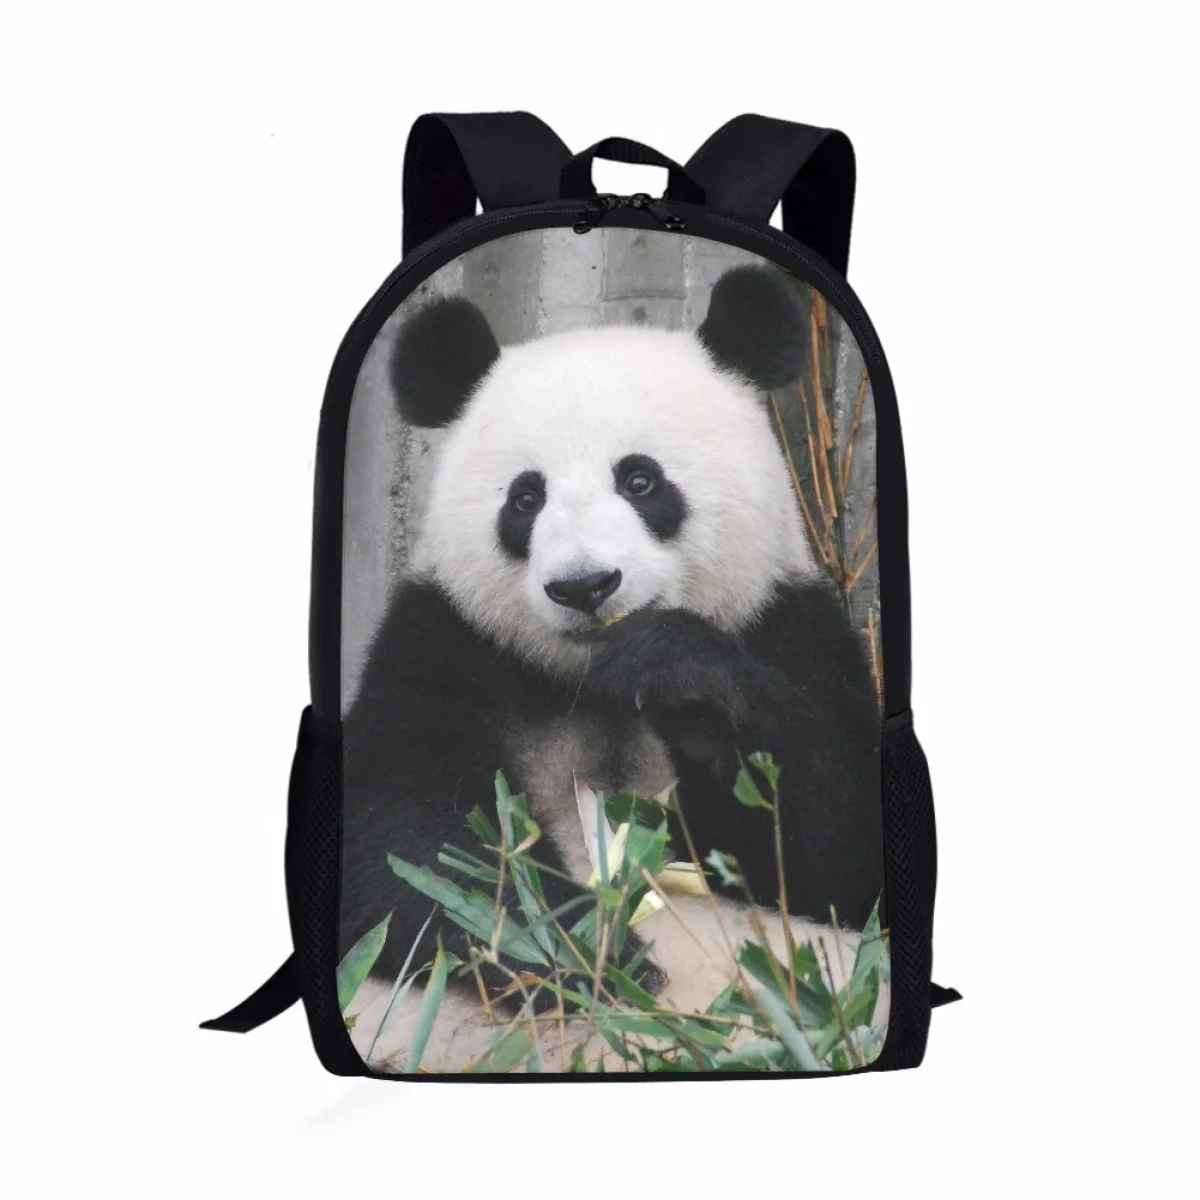 

Cute panda 3D Print School Backpacks For Teenage Girls College Teenagers Student Bookbag Classic Cartoon Travel Bag large Bags